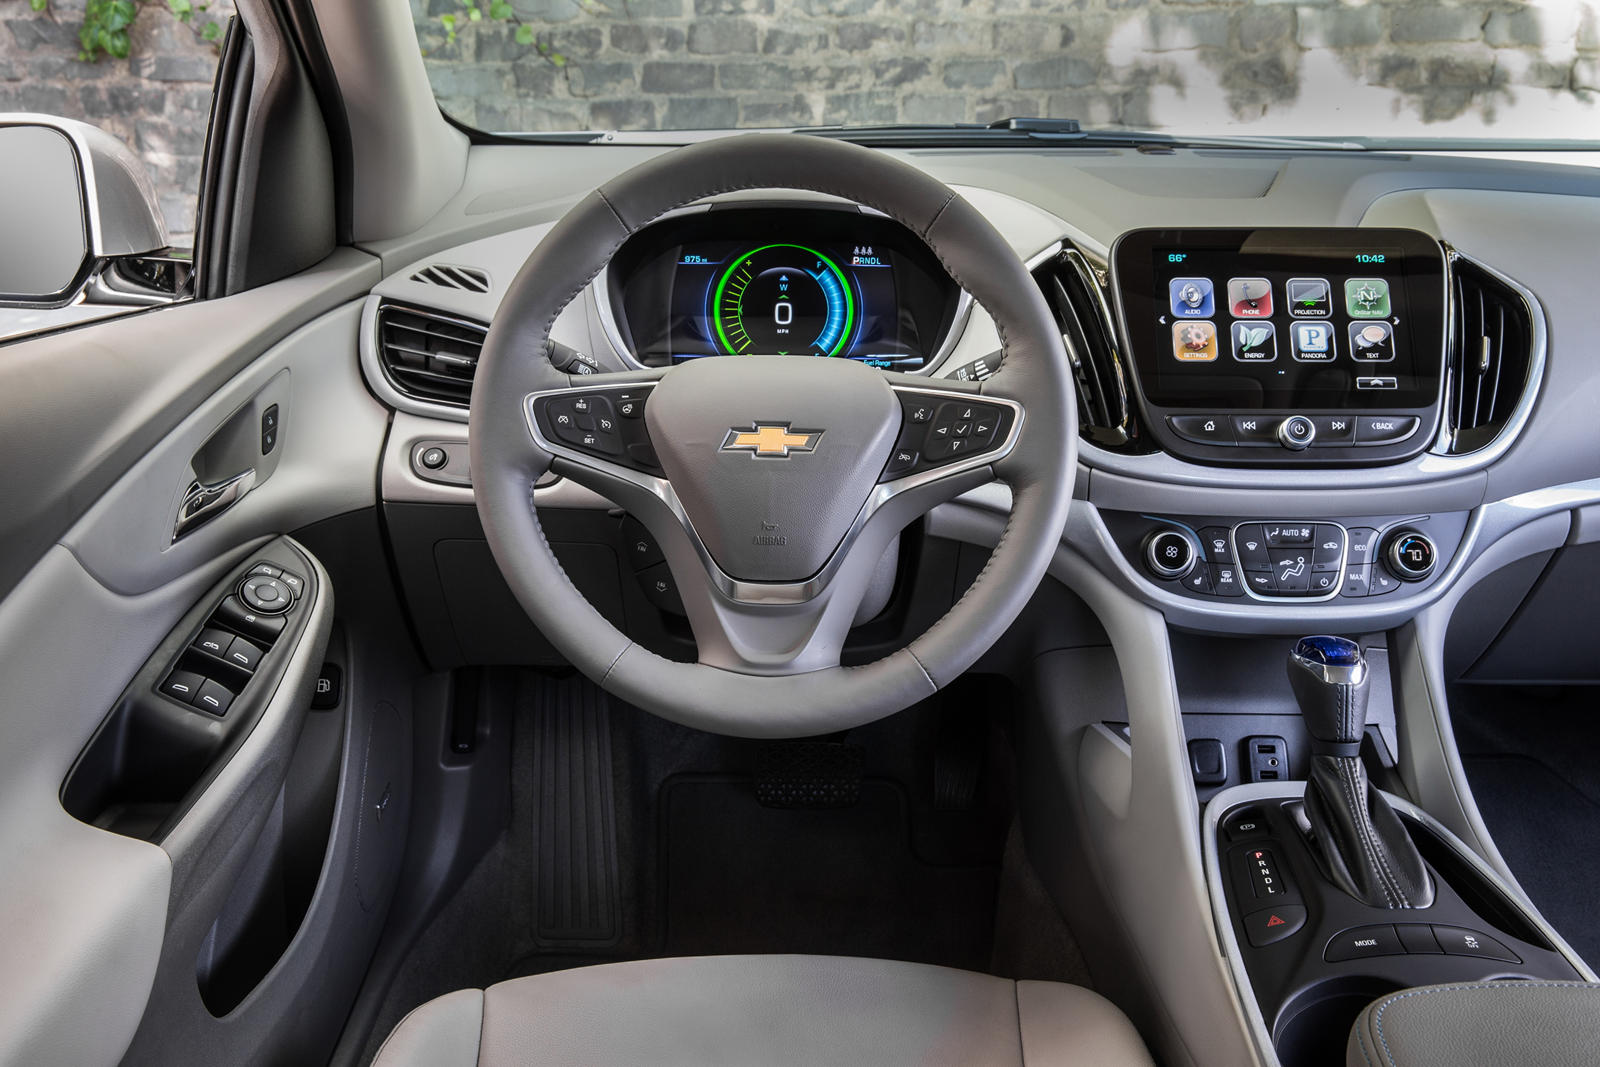 2019 Chevrolet Volt Interior Dimensions: Seating, Cargo Space & Trunk Size  - Photos | CarBuzz